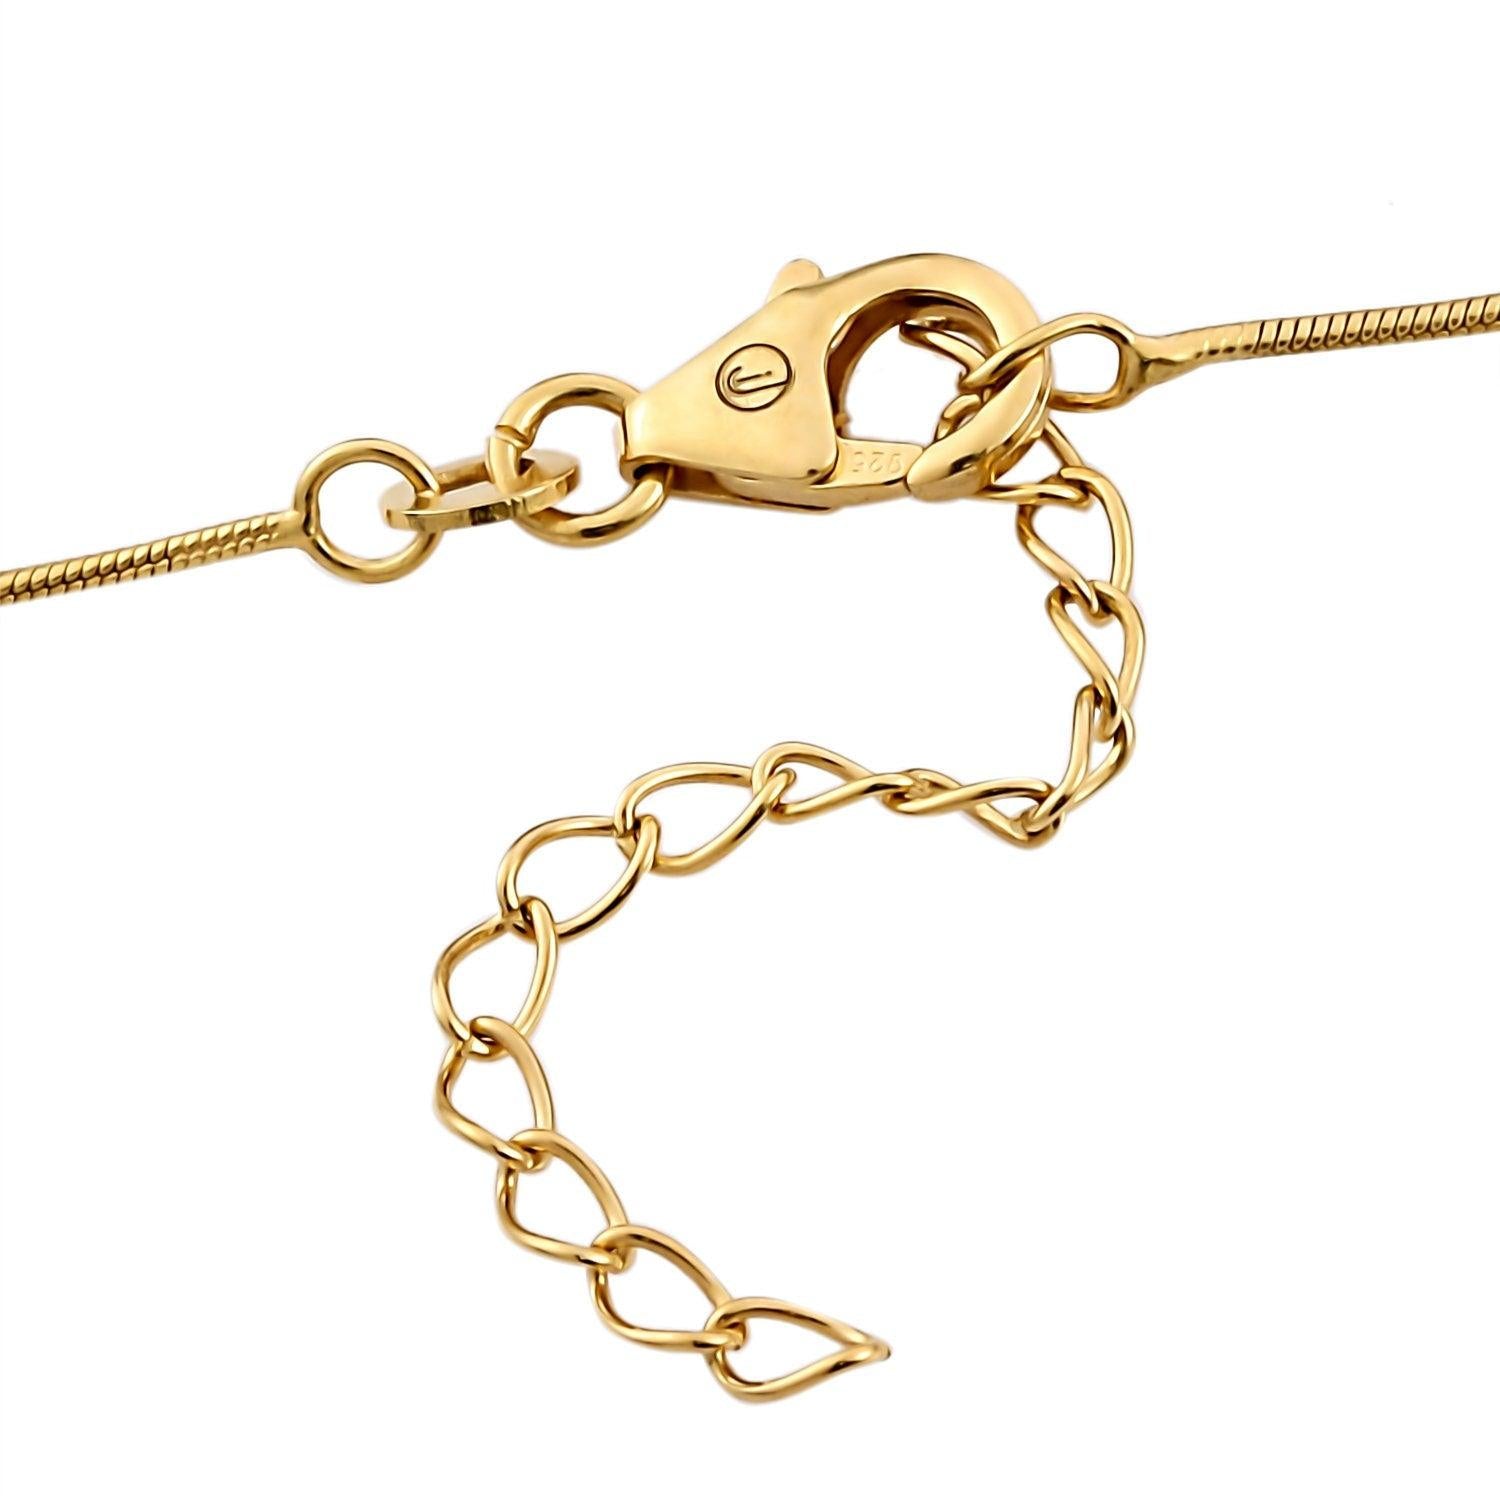 Shungite Pendant Necklace, Shungite Healing Pendant, 925 Sterling Silver, Black Gemstone Necklace, Gold Necklace, Gift - Inspiring Jewellery